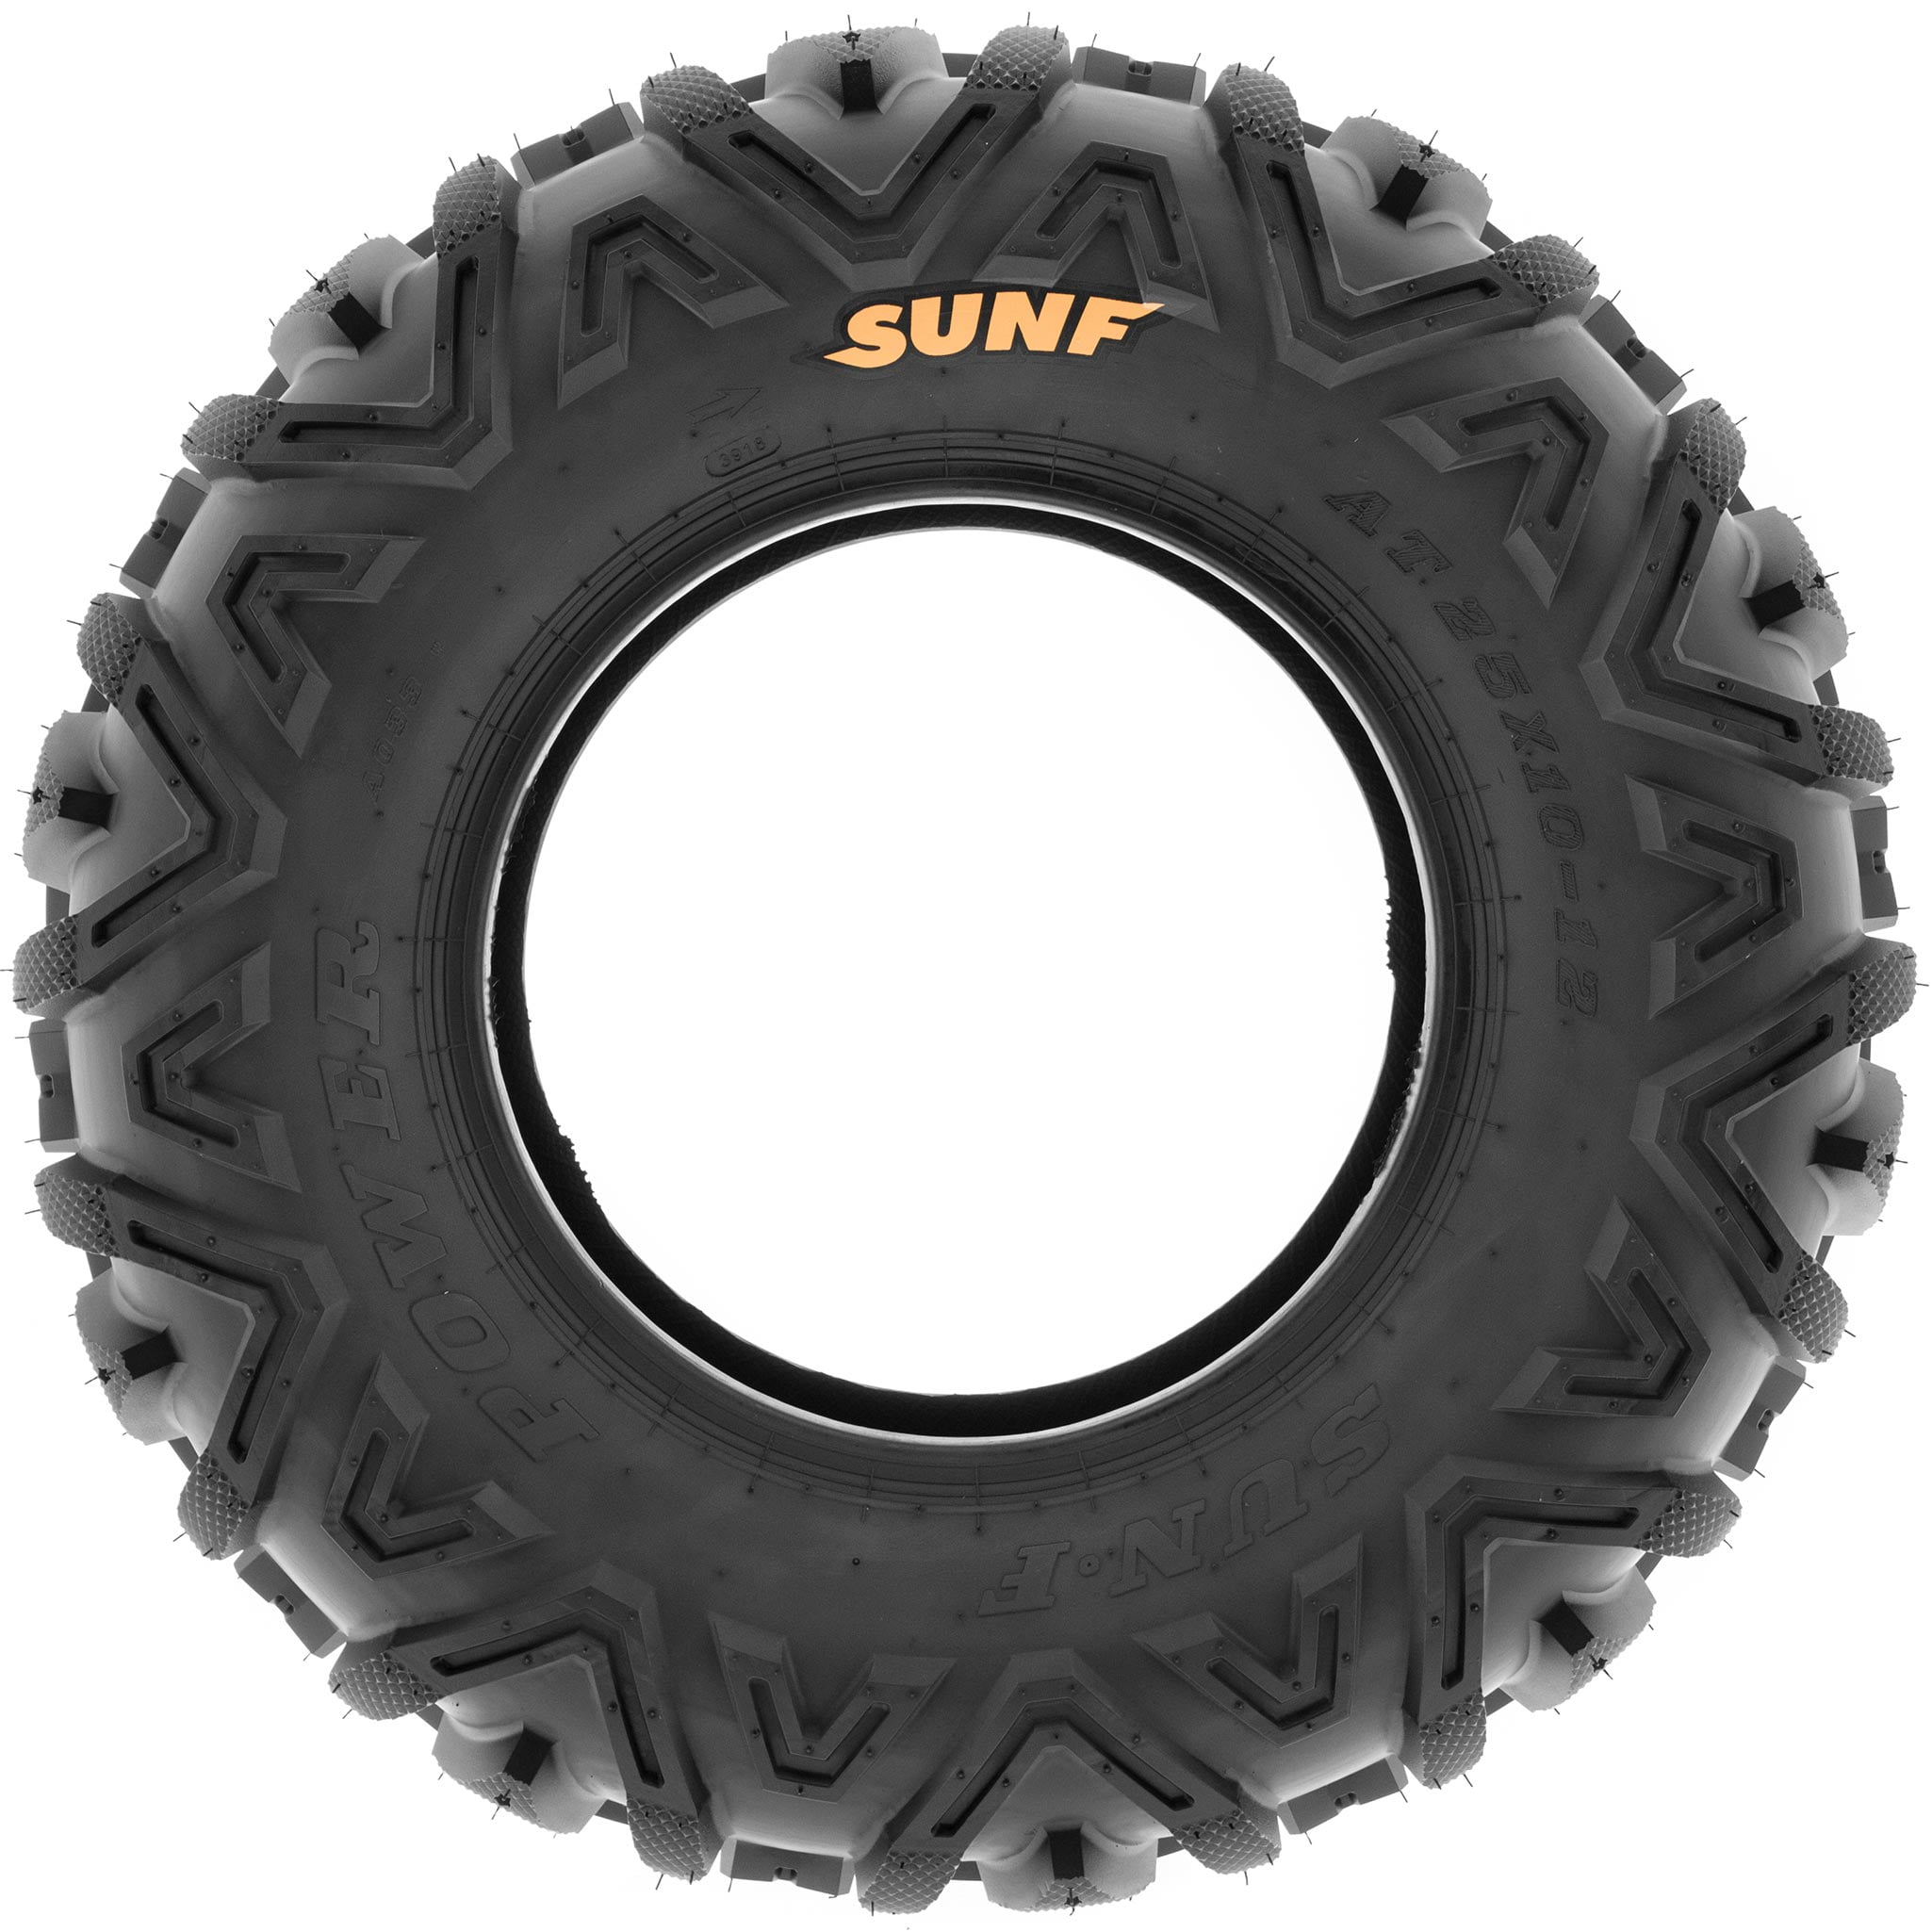 Single SunF 26x9-12 Replacement Tubeless 6 PR ATV UTV Tires A051 POWER II 